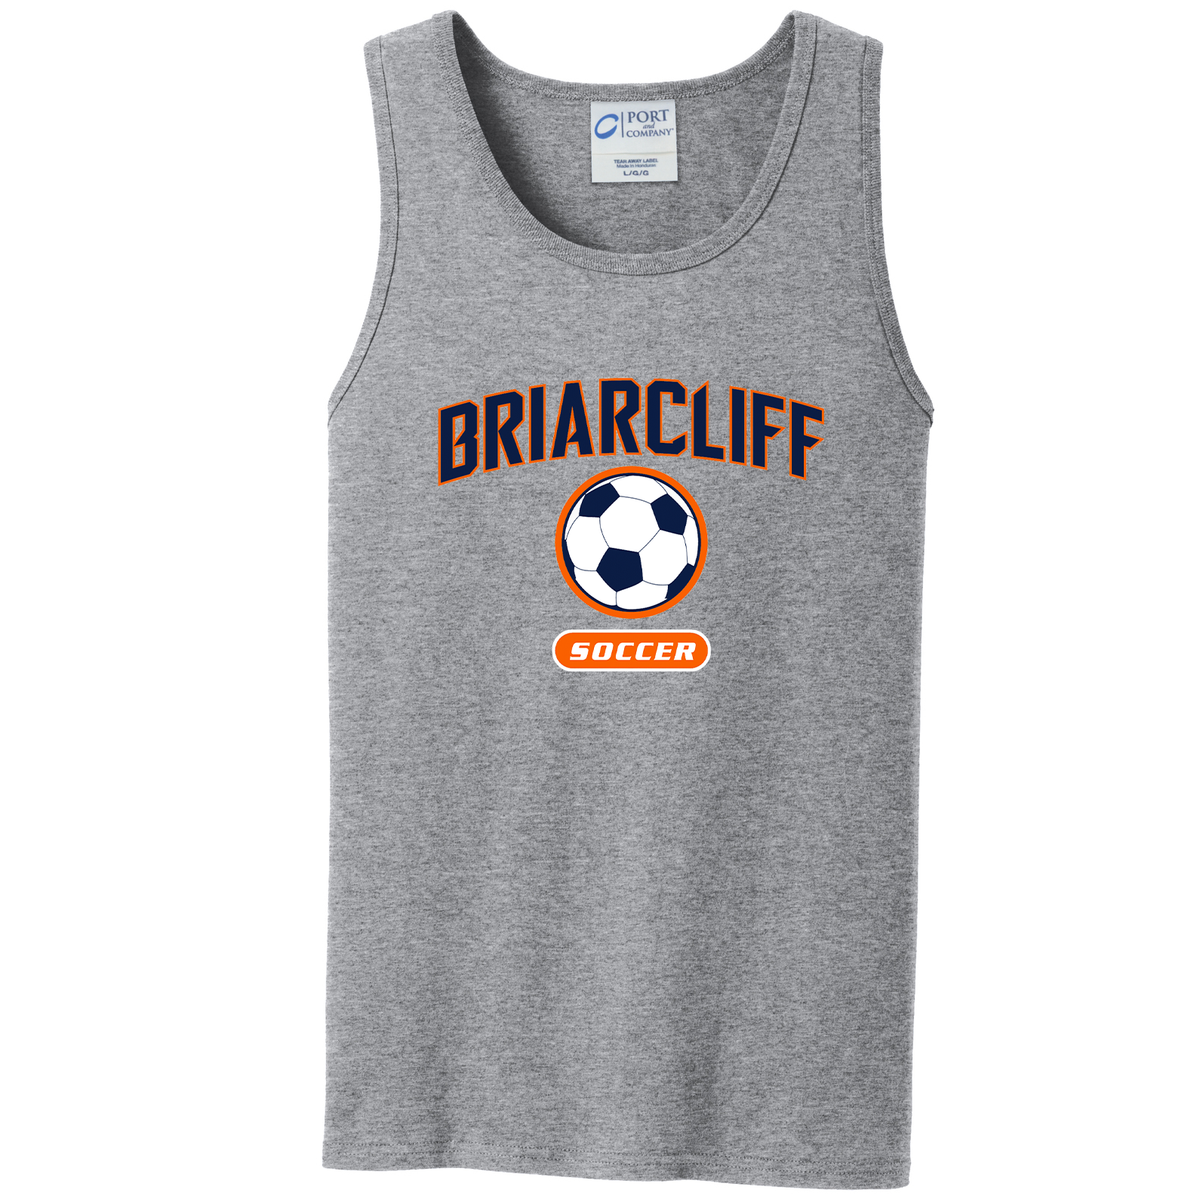 Briarcliff Soccer Sleeveless Cotton Tank Top